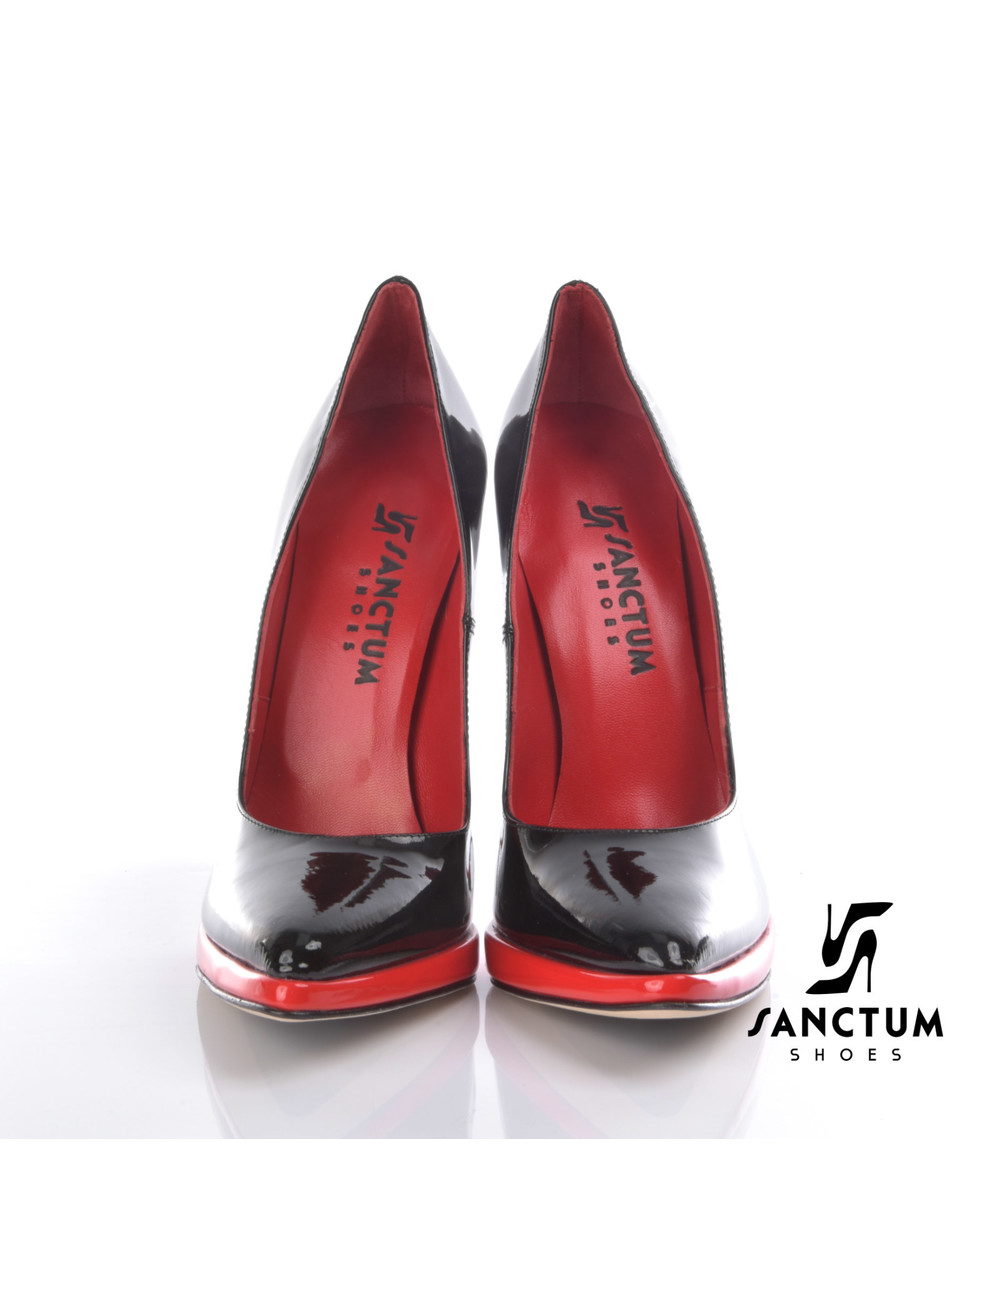 Sanctum  Extreme high Italian pumps PHOEBE with metal needle heels